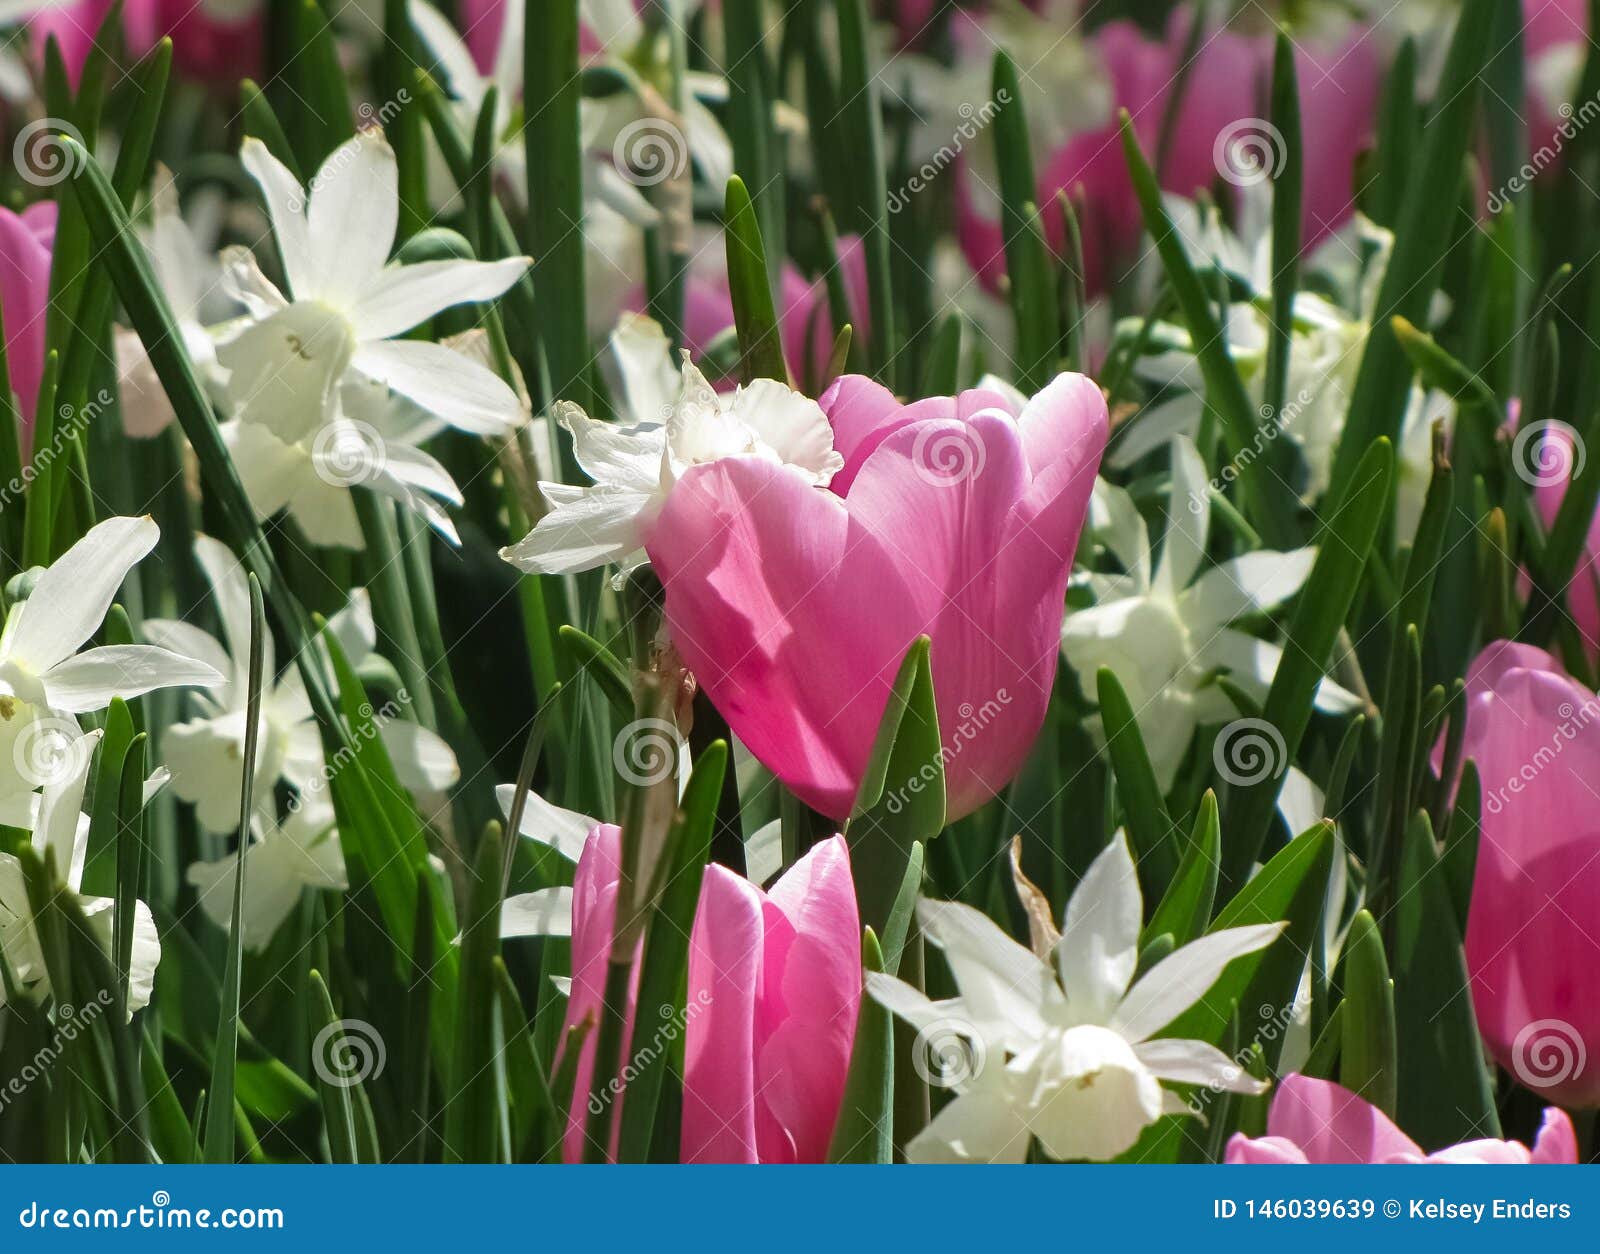 White Daffodils Macro Pink Tulip Stock Image Image Of Green